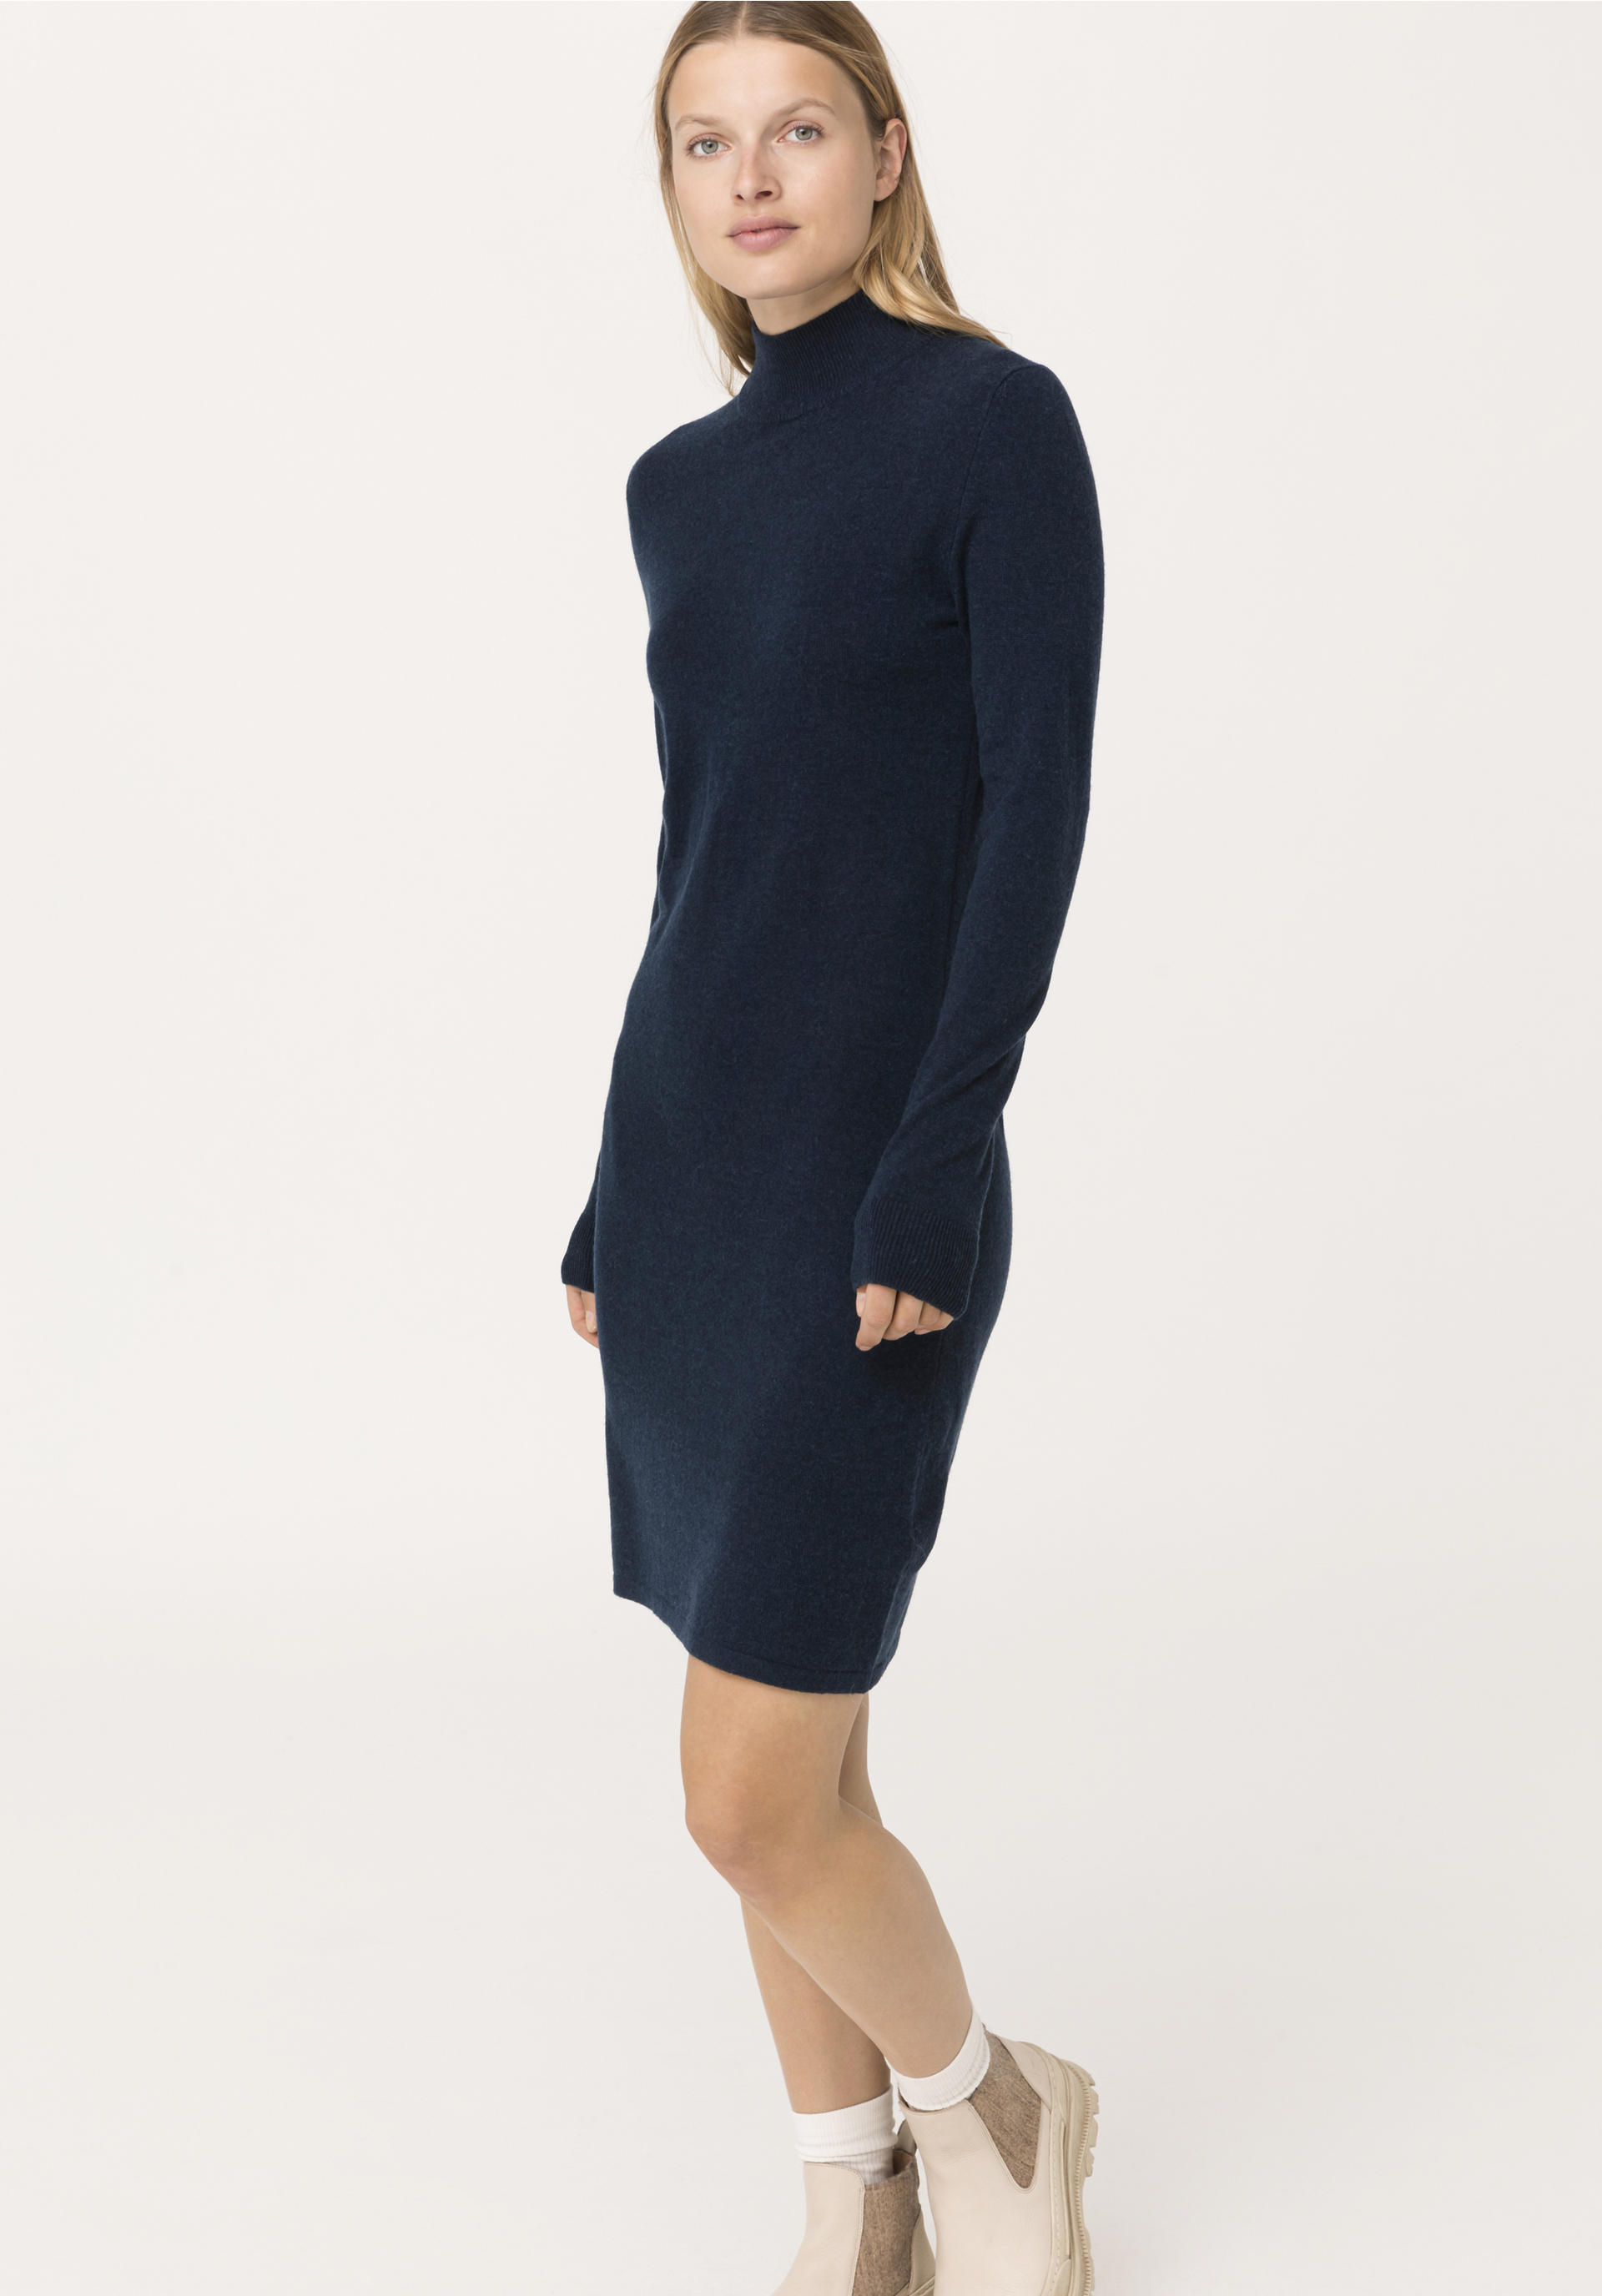 Gr 36,Blau-gelb 100% Bio-Baumwolle Mode Kleider Polokleider neuwertig Hessnatur Polo Kleid 